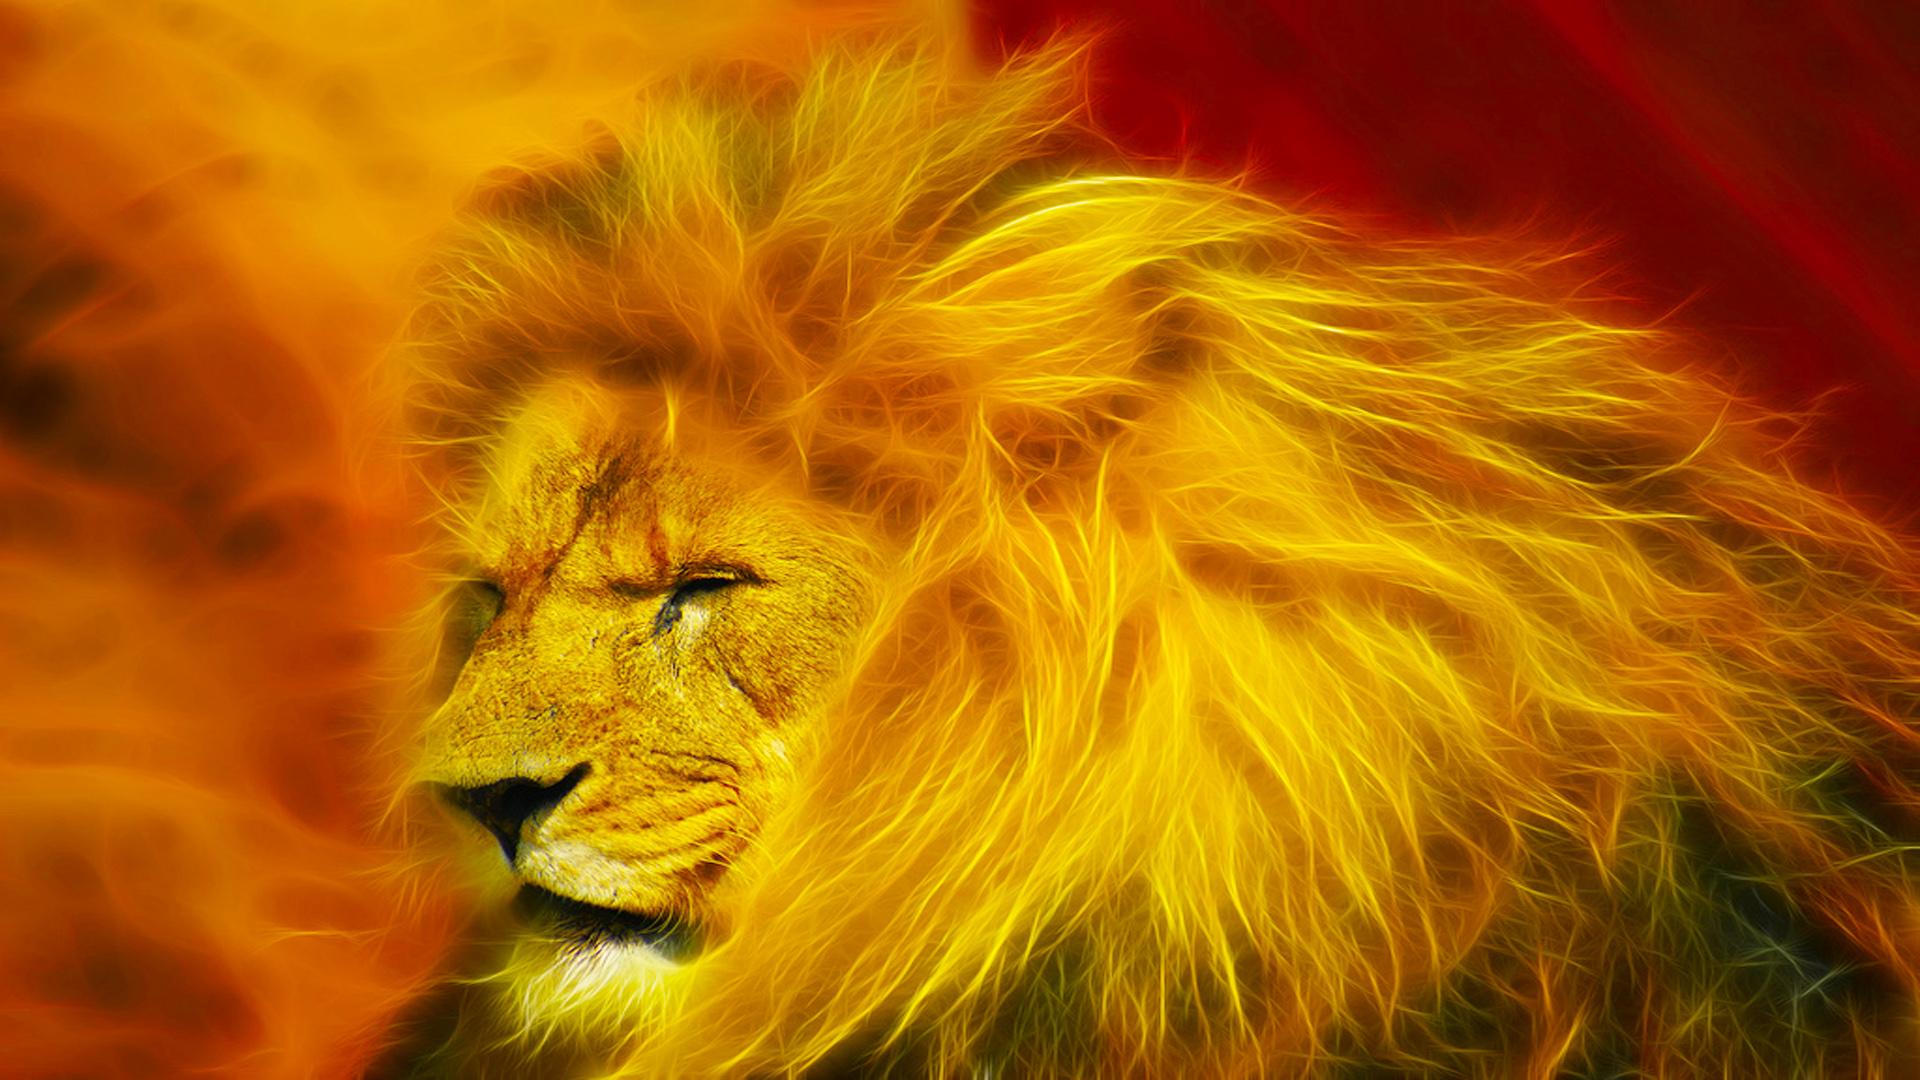 lion king mp3 free download